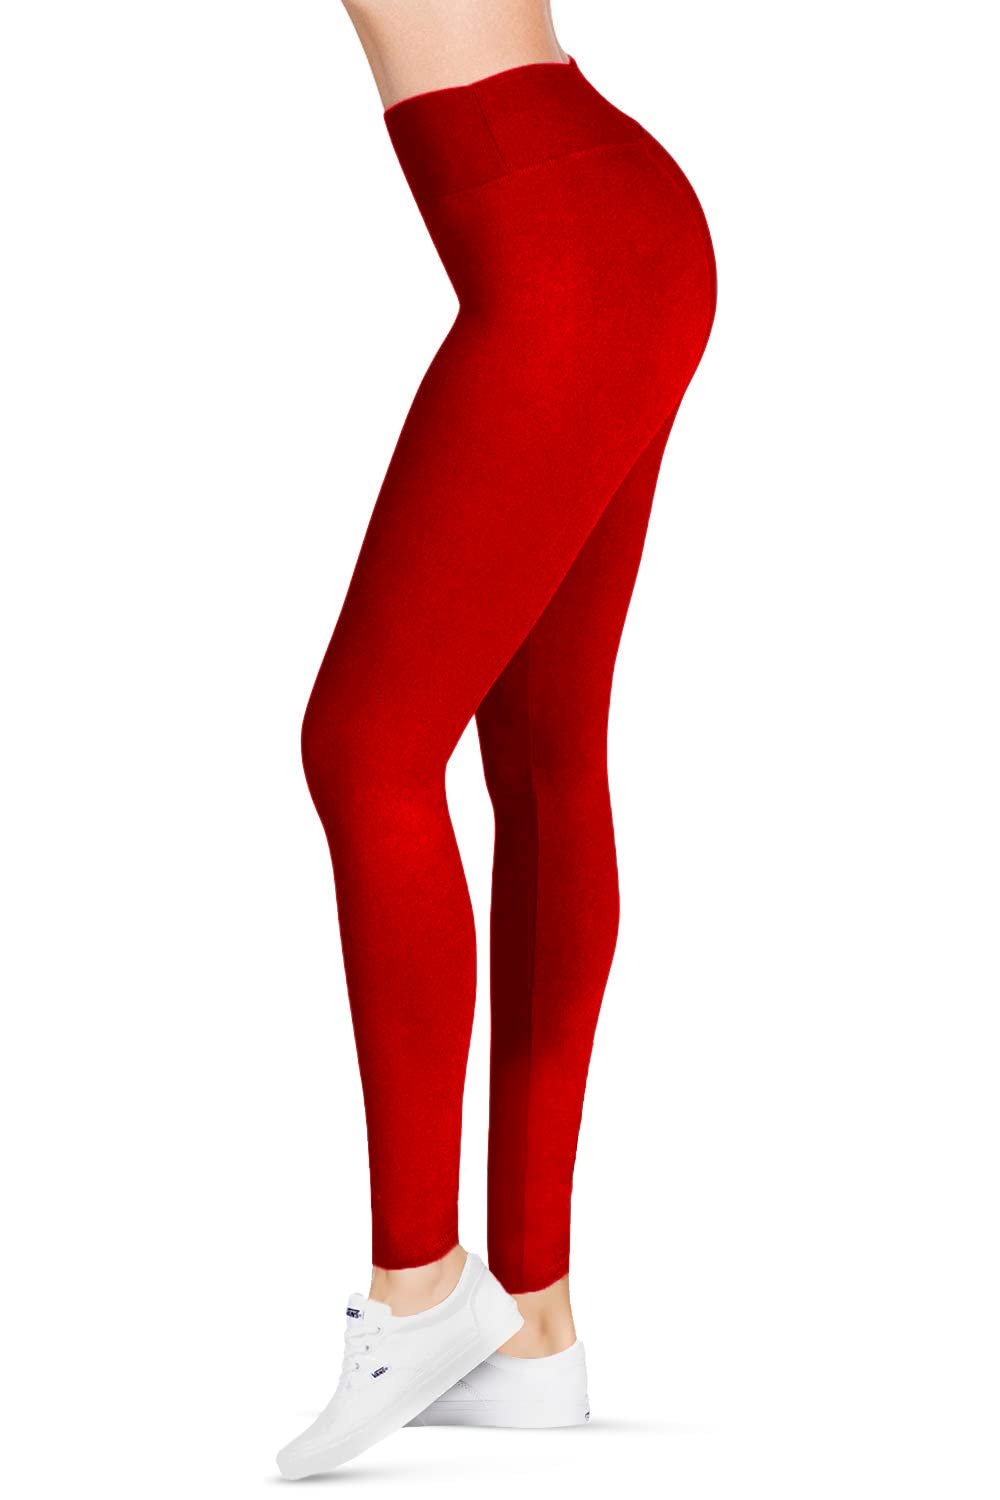 HMGYH satina high waisted leggings for women Plus High Waist Flare Leg  Pants (Size : XS)